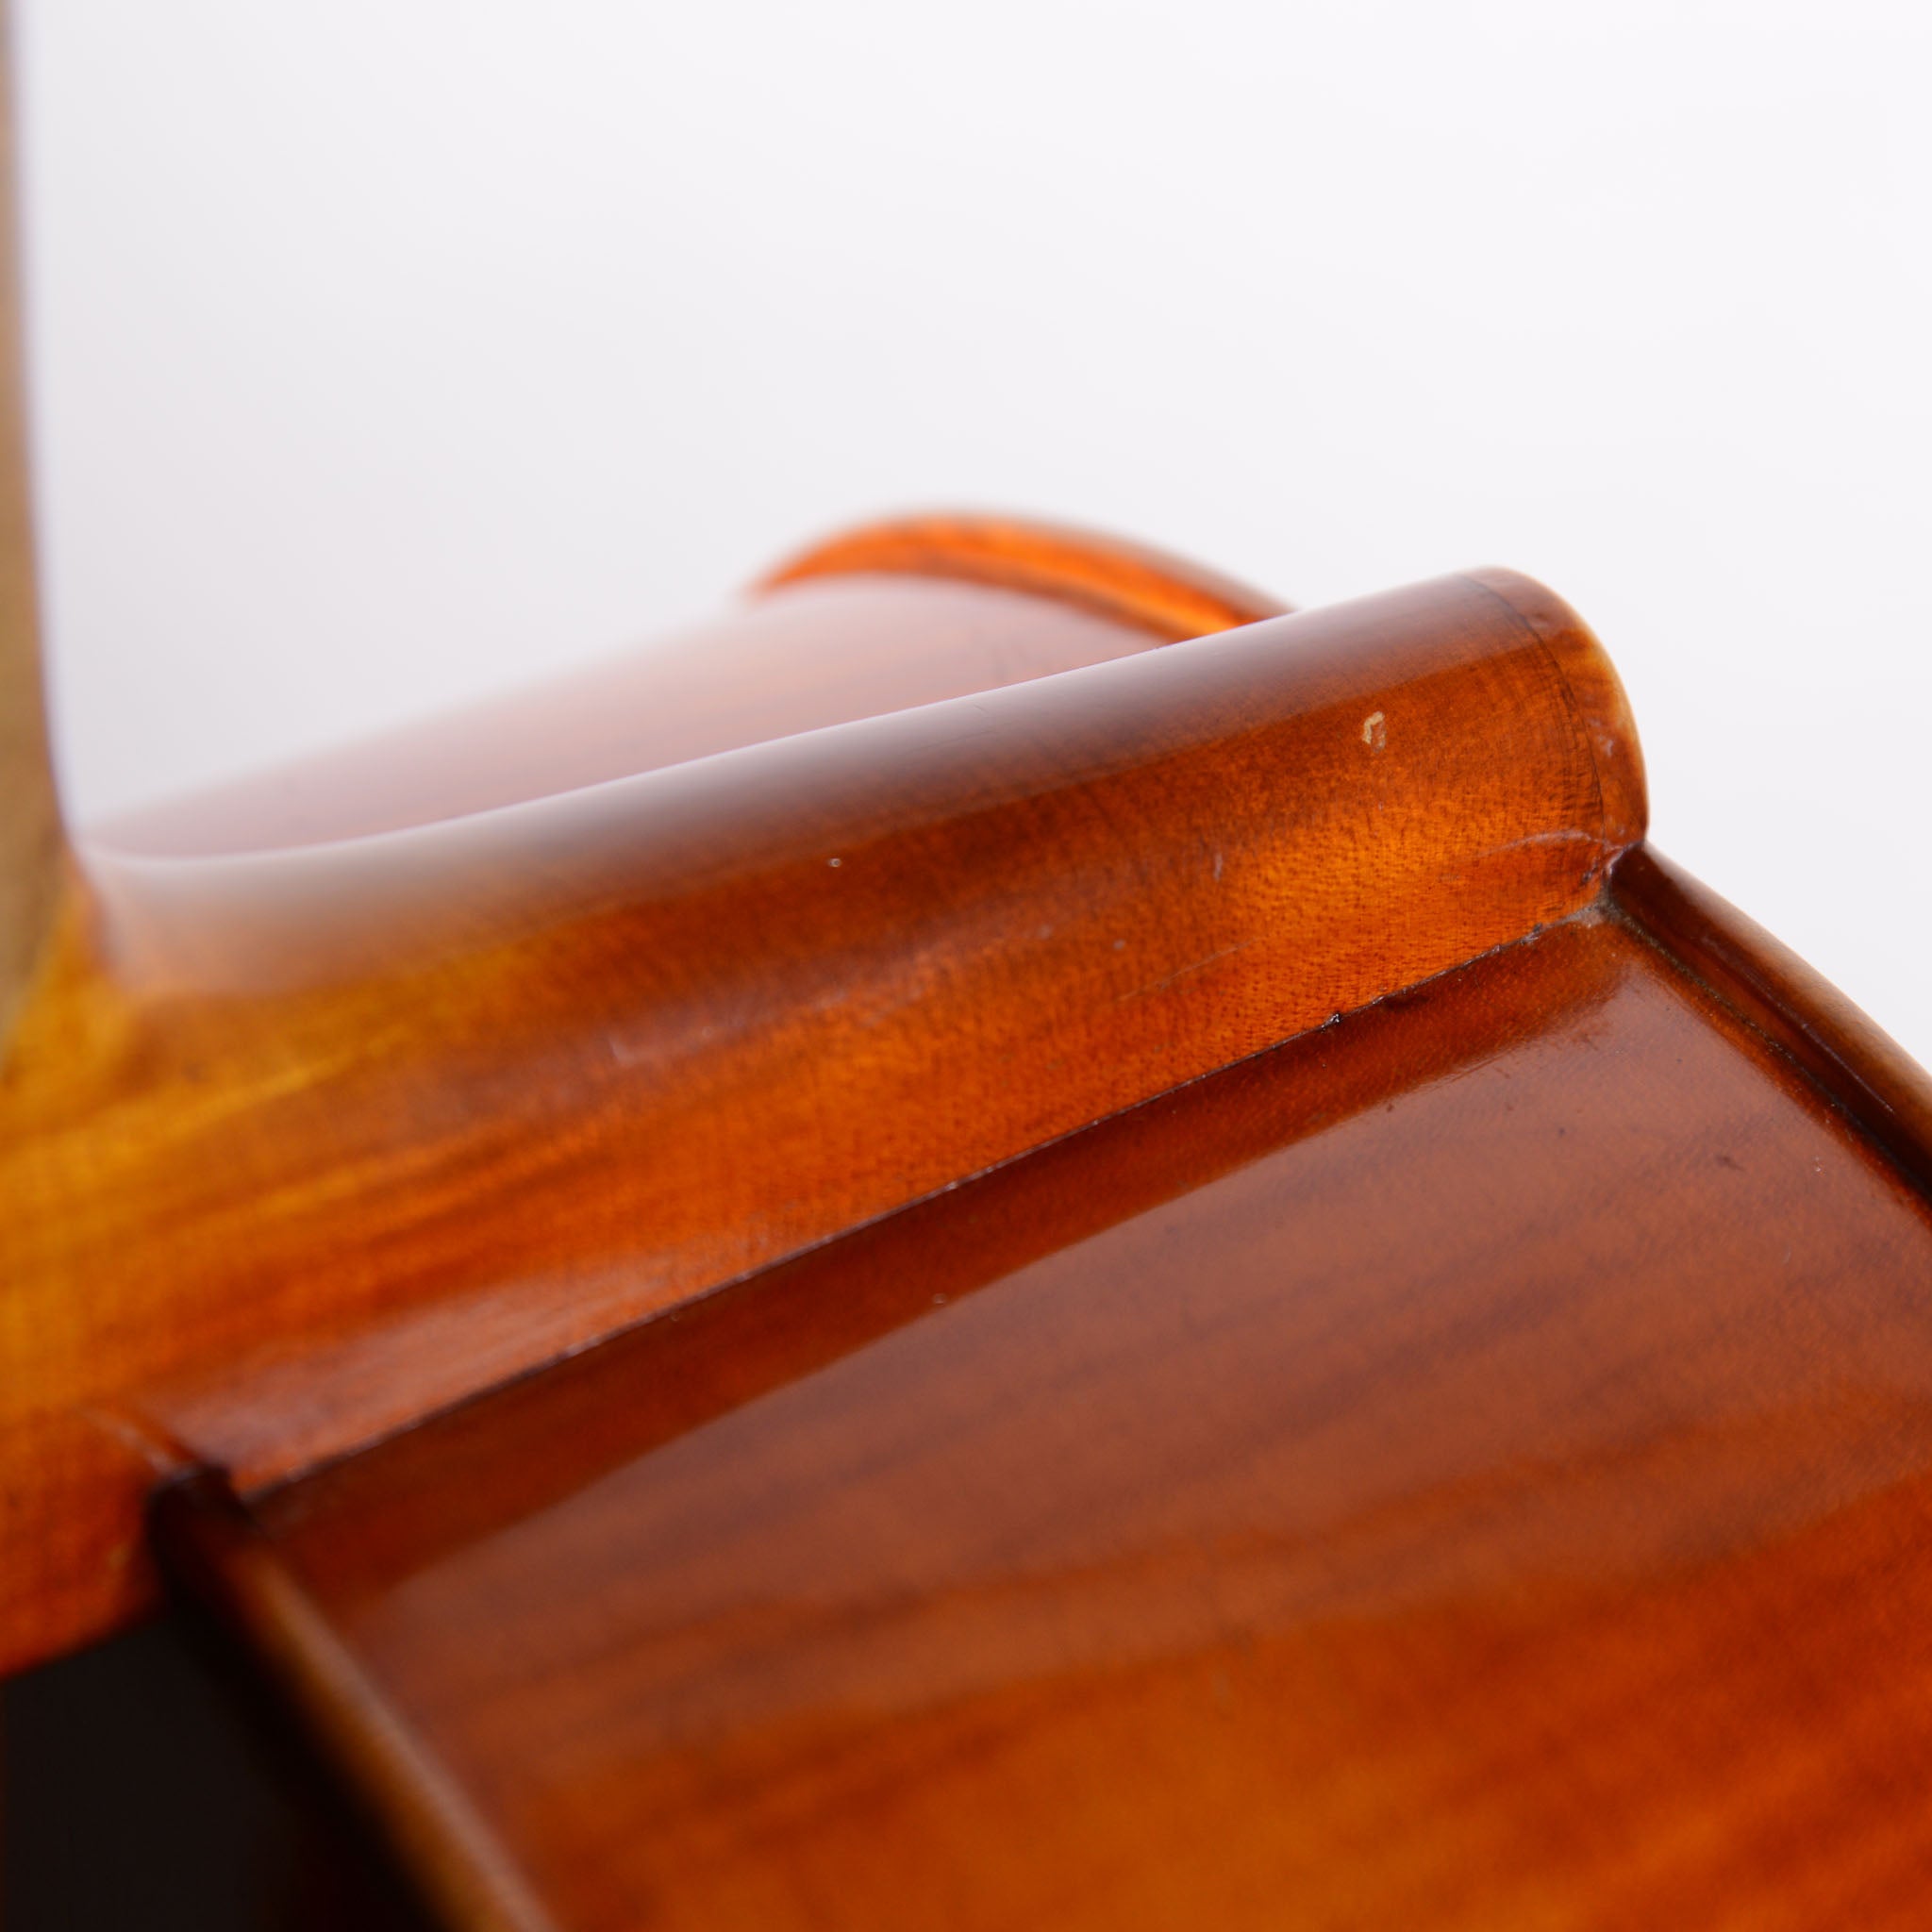 Simon Joseph Stradivarius Cello, Transylvania 2016